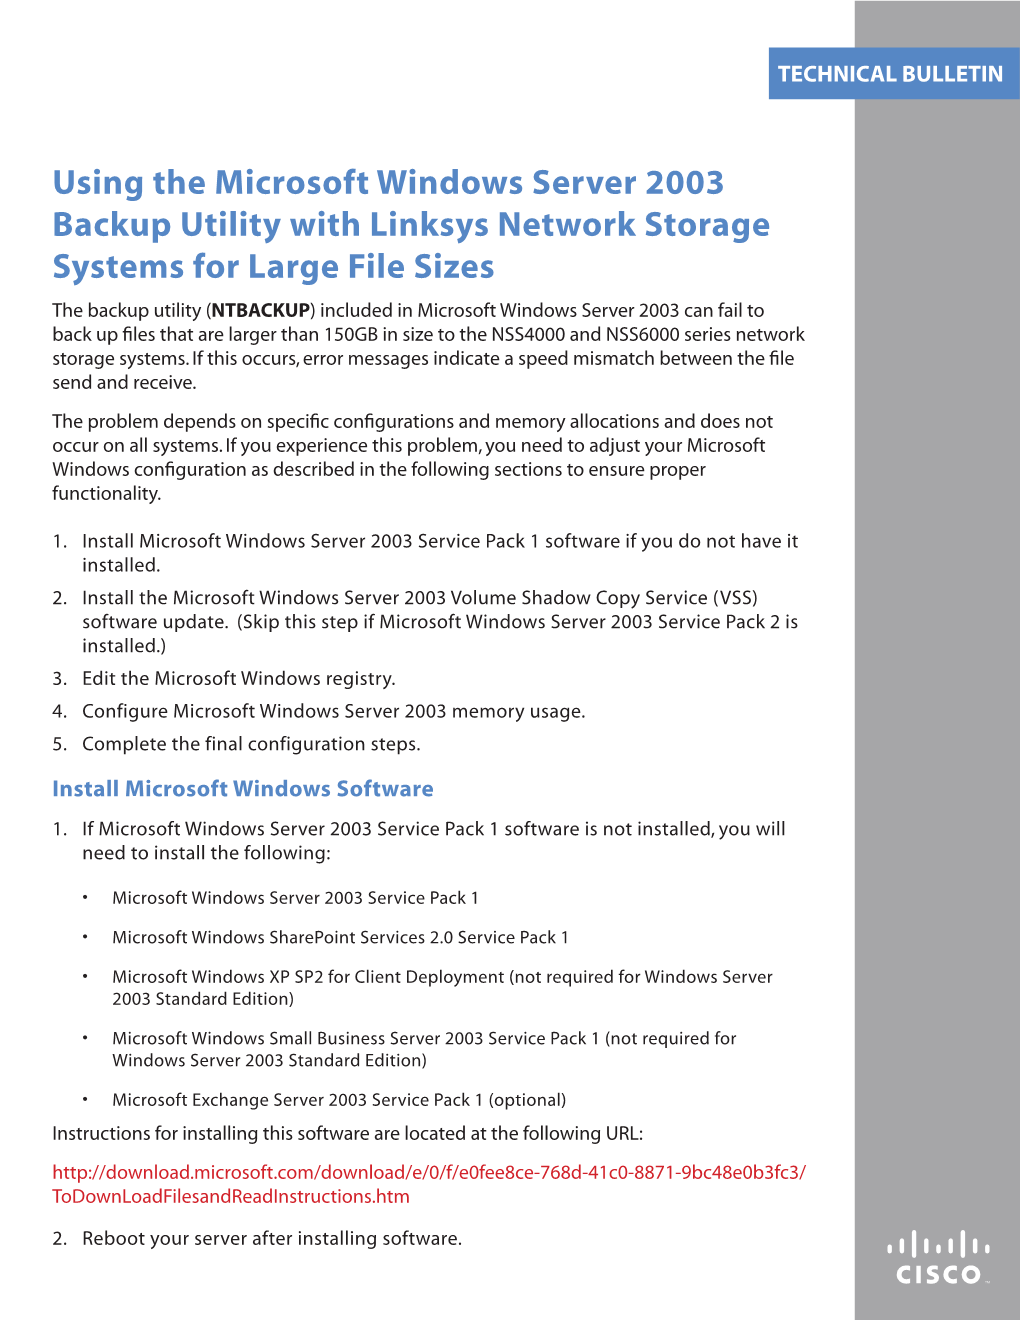 Using the Microsoft Windows Server 2003 Backup Utility with Linksys